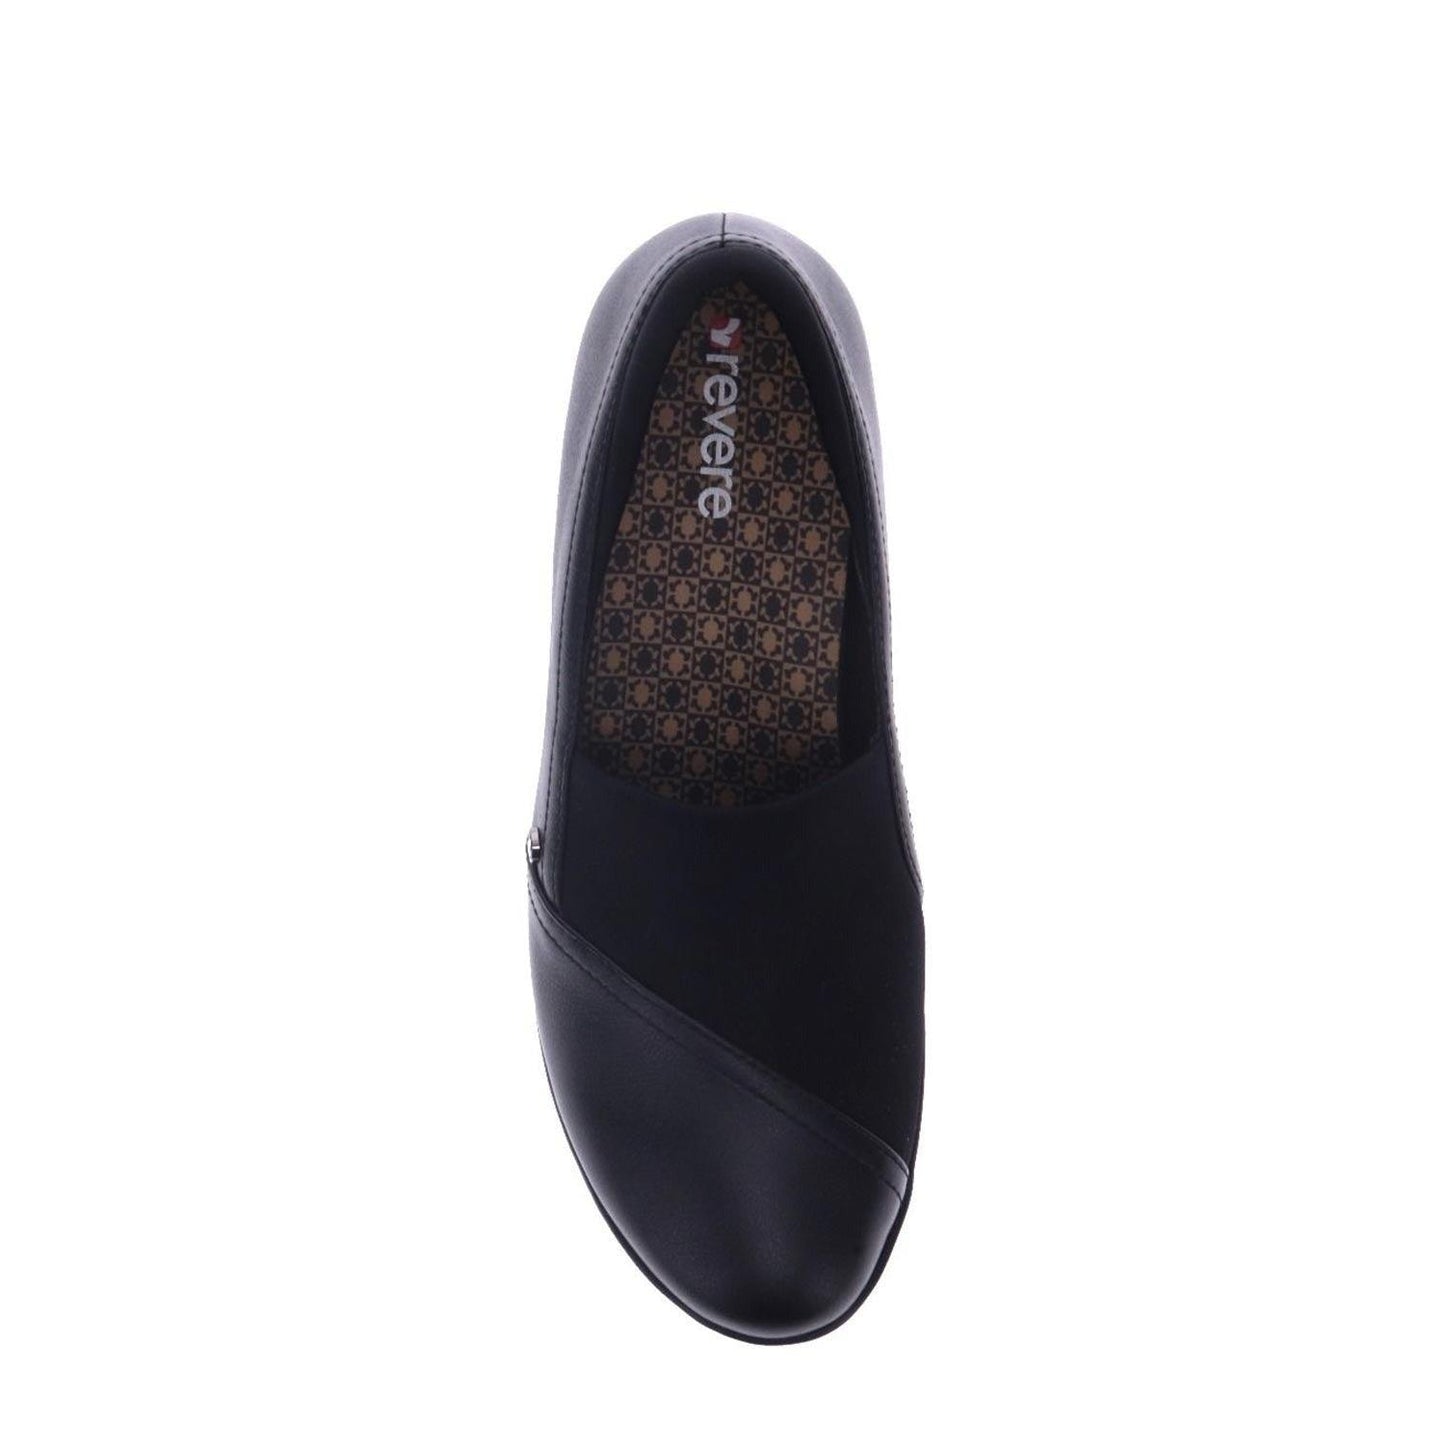 Revere Naples Leather and Neoprene Velcro Orthopaedic Shoe - Anjelstore 